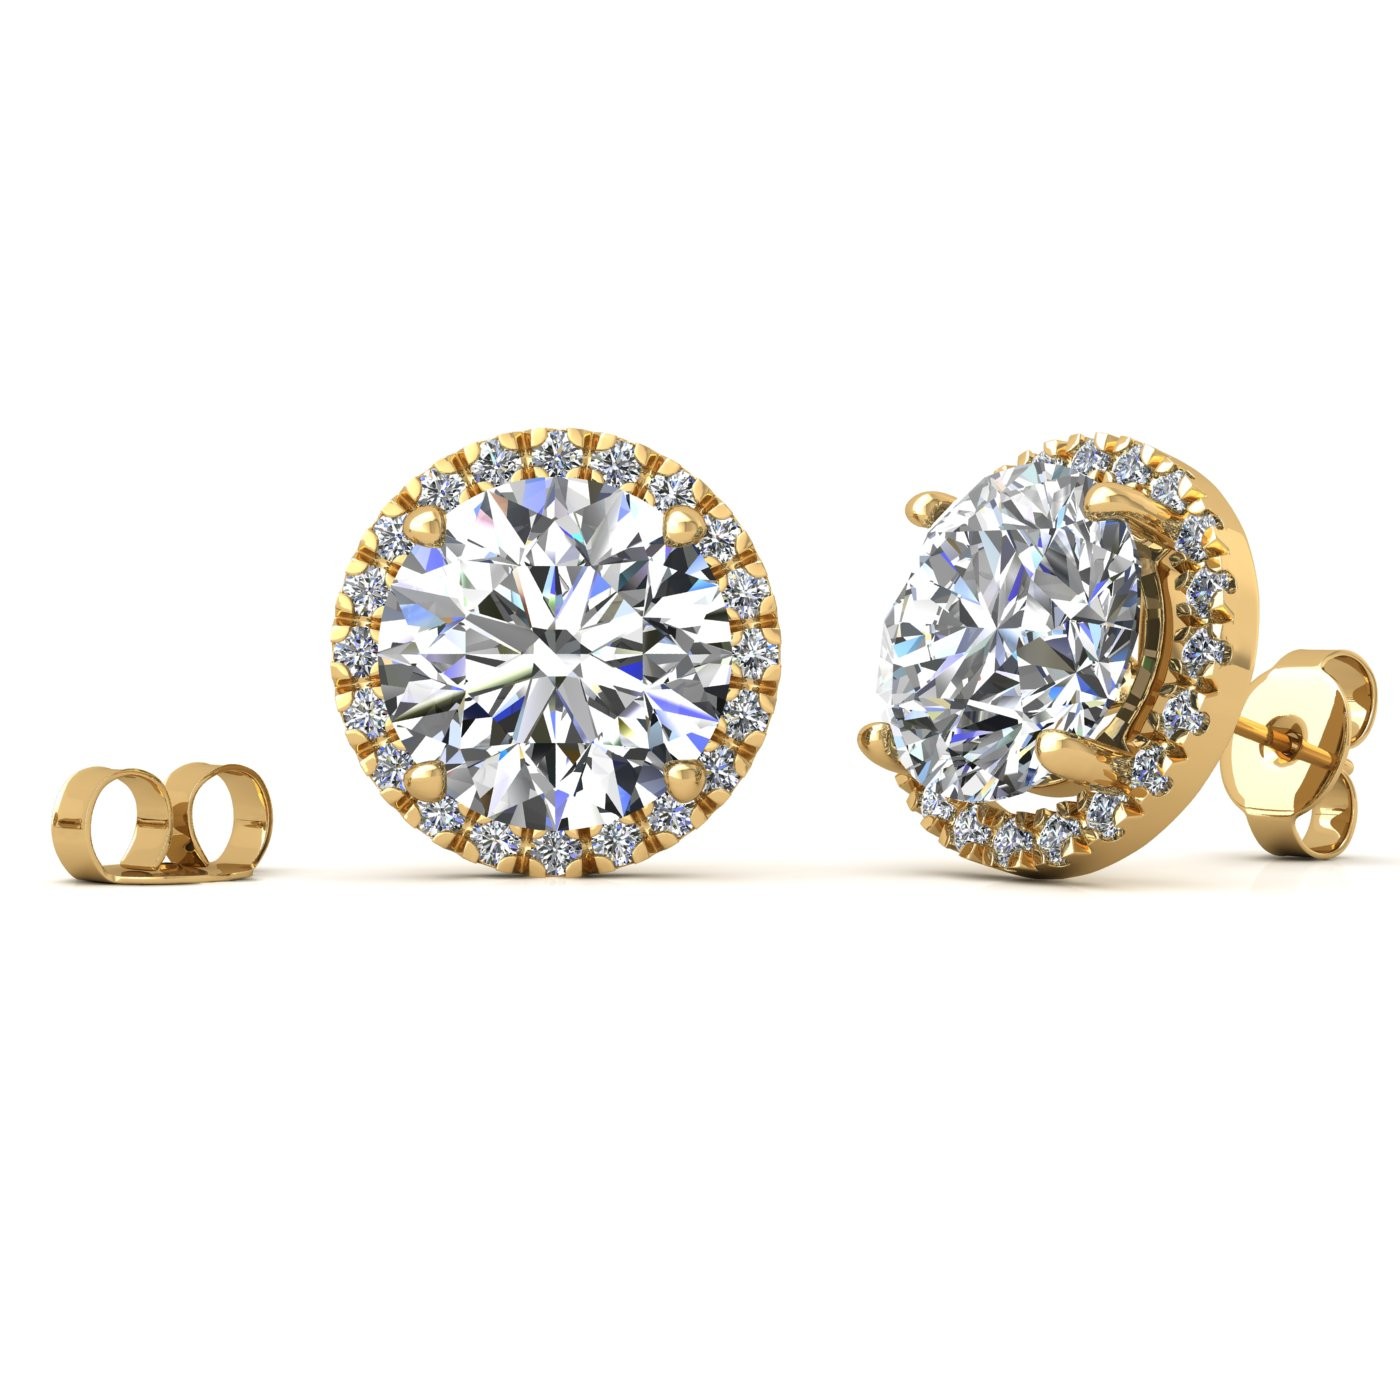 18k yellow gold  2,5 ct each (5,0 tcw) 4 prongs round shape diamond earrings with diamond pavÉ set halo